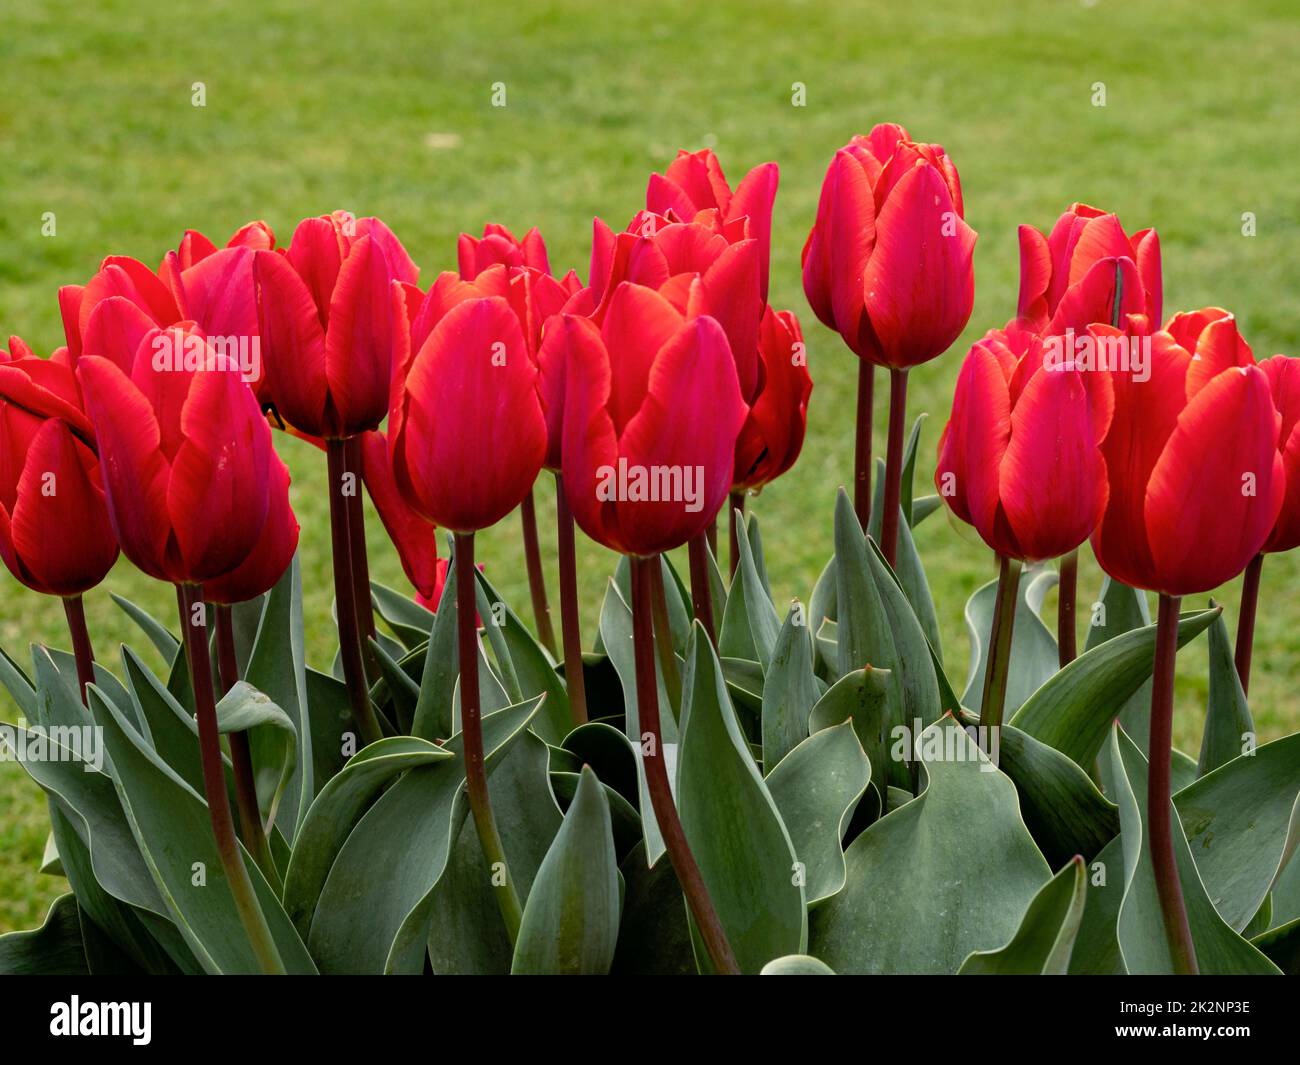 Lovely red tulips flowering in a garden Stock Photo